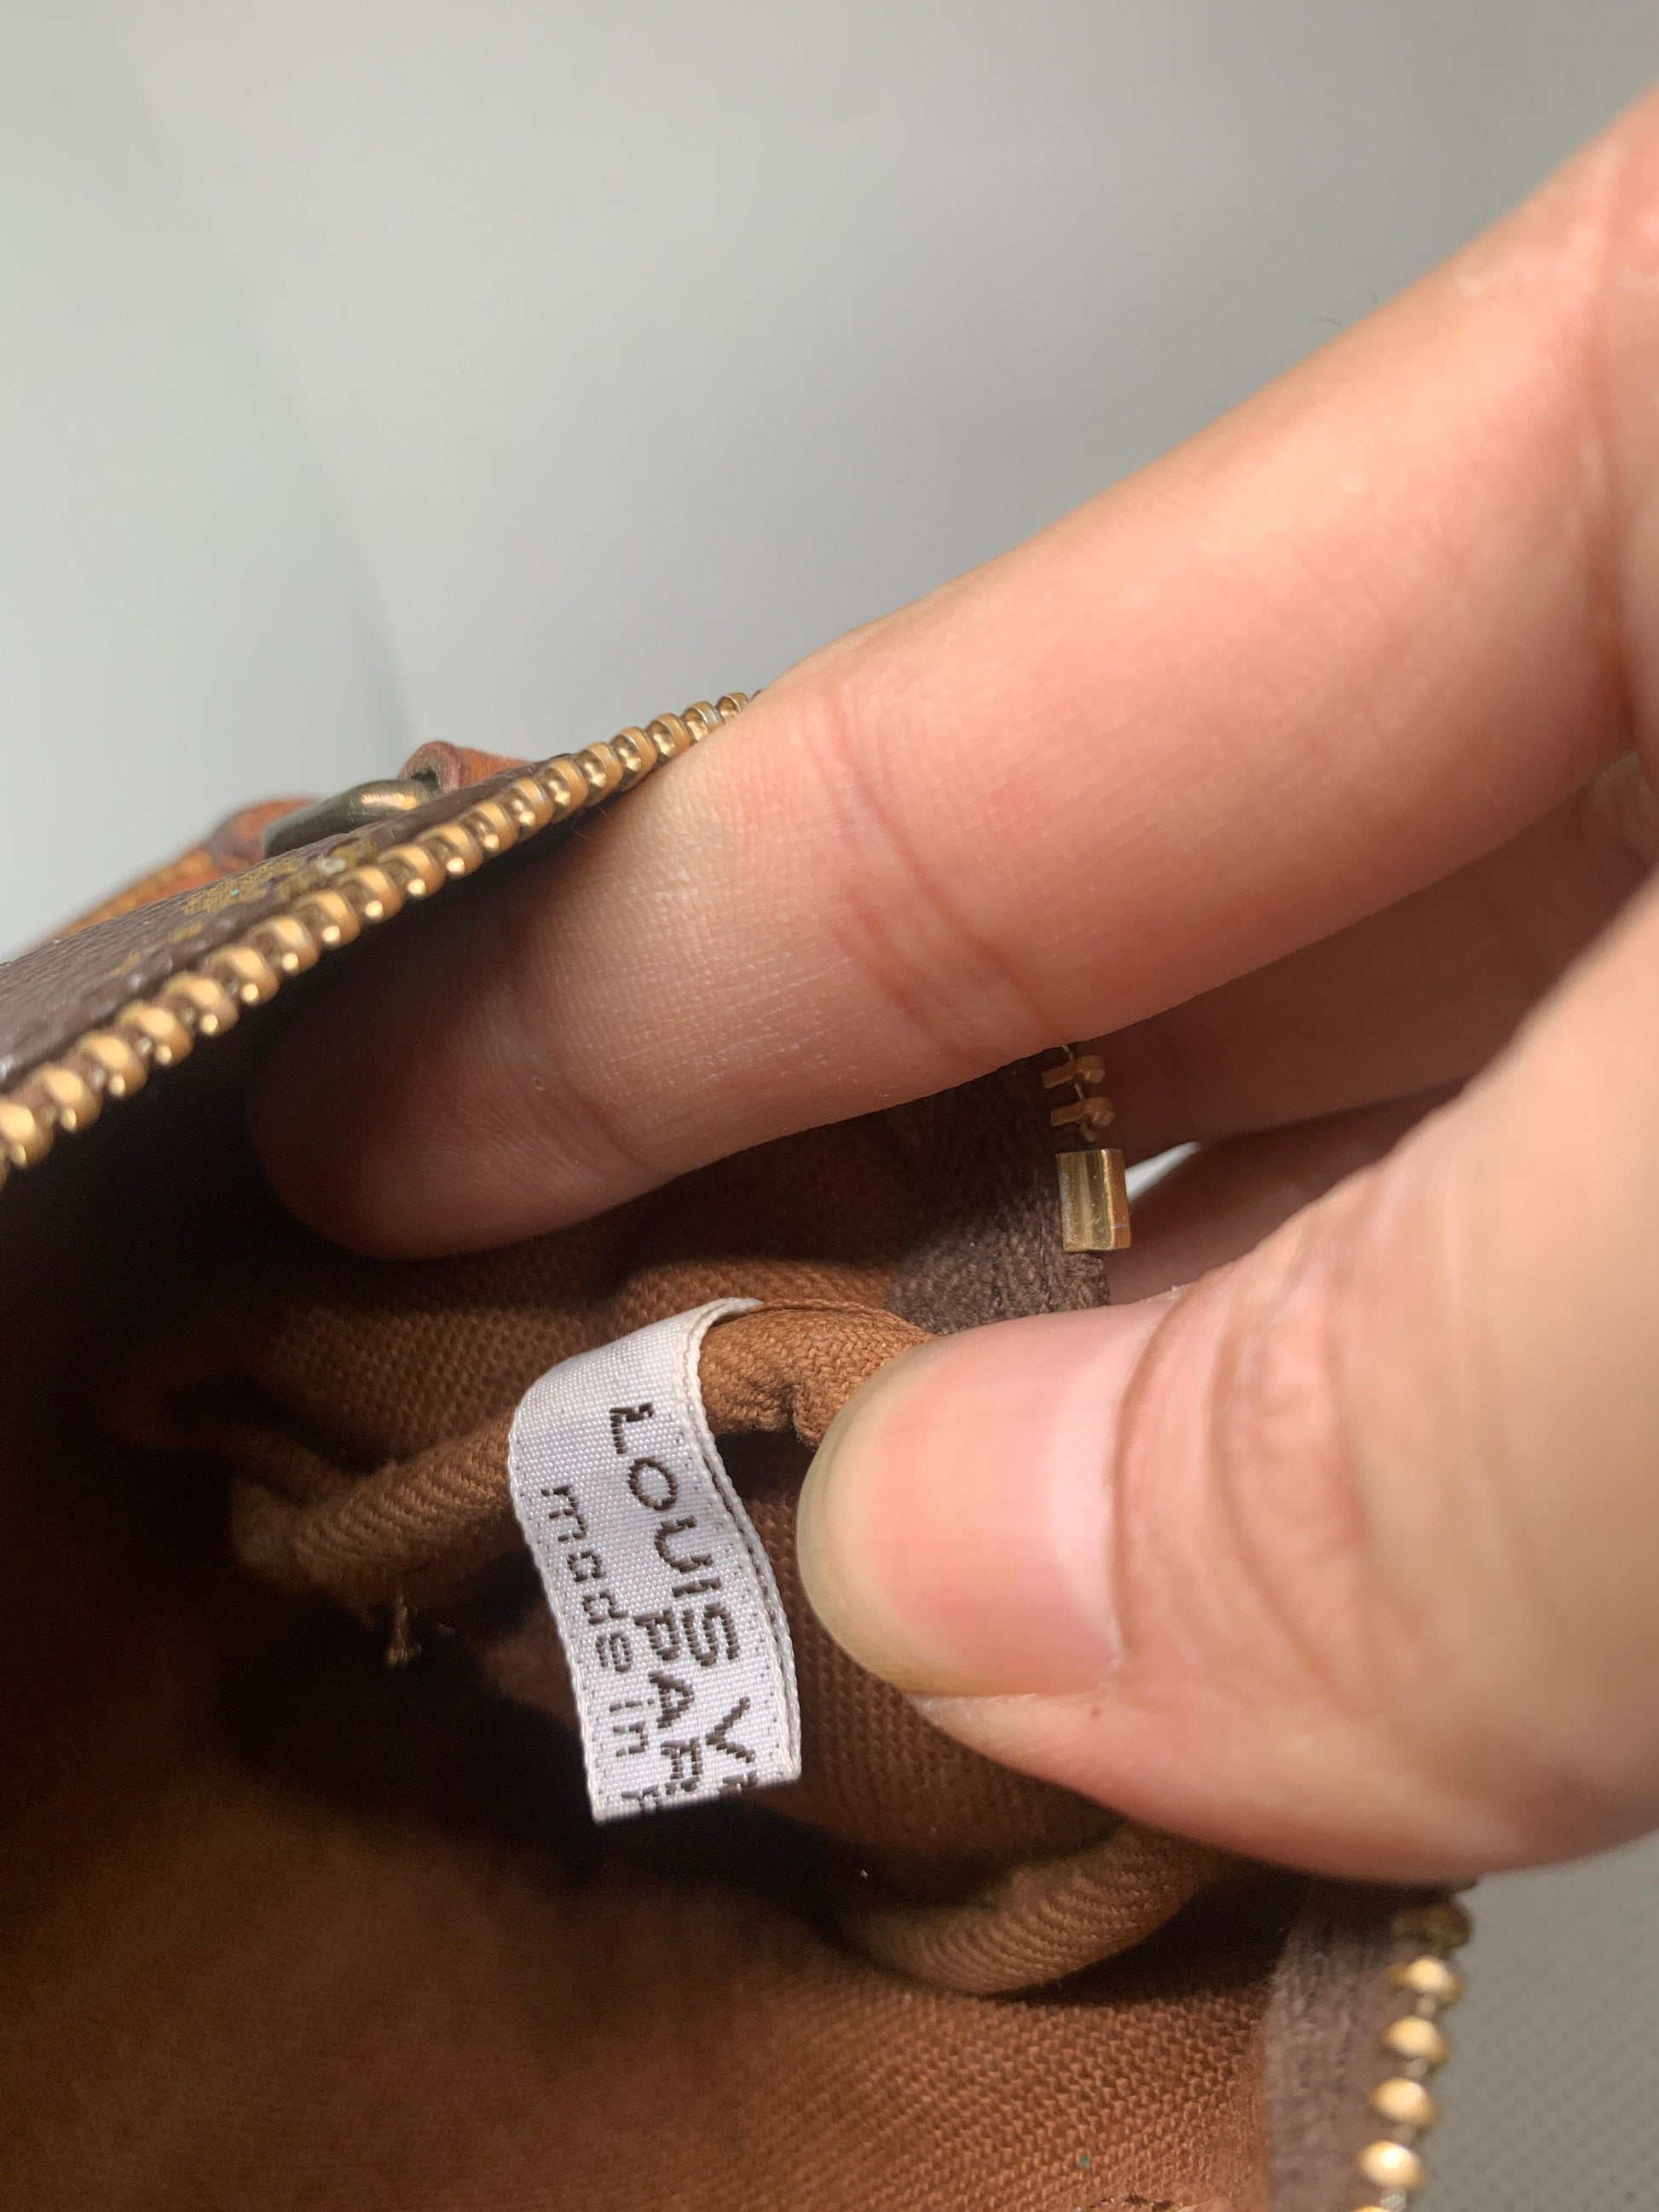 Authentic Louis Vuitton mini monogram speedy handbag purse 2 ways